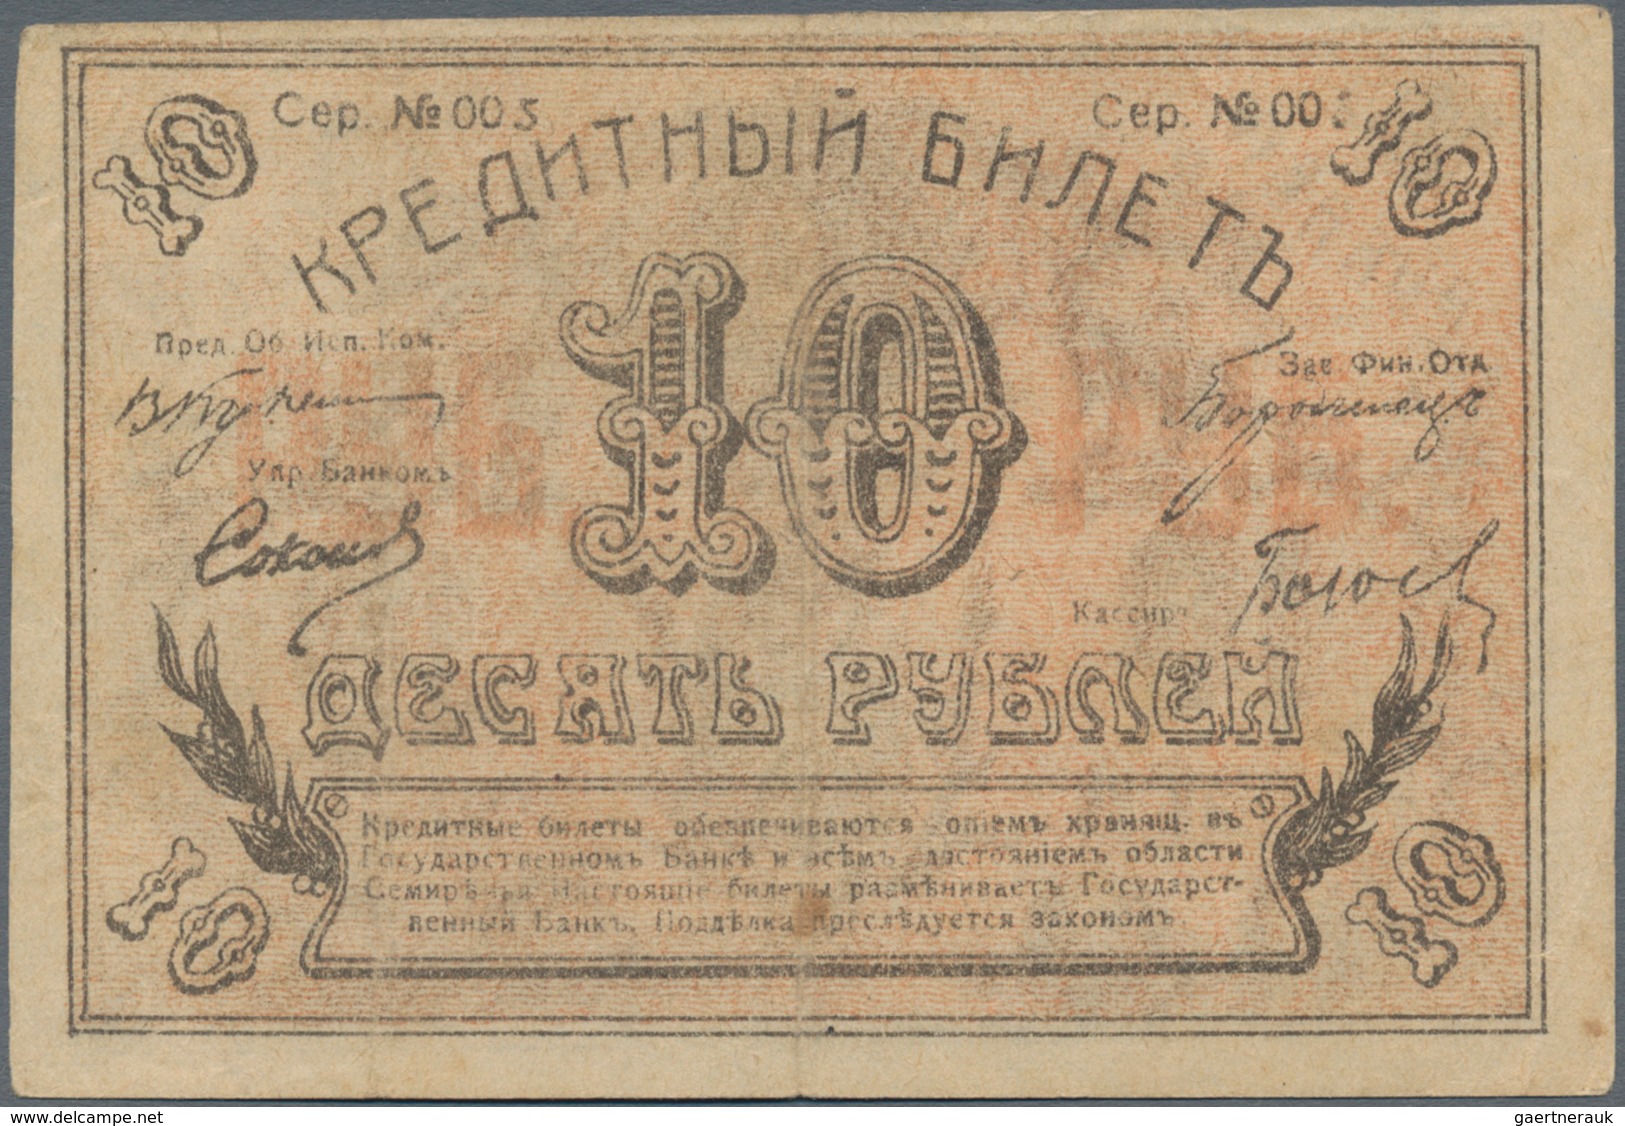 Russia / Russland: Central Asia - Semireche Region 10 Rubles 1918, Series 005, P.S1126 (R. 20611, K. - Russland